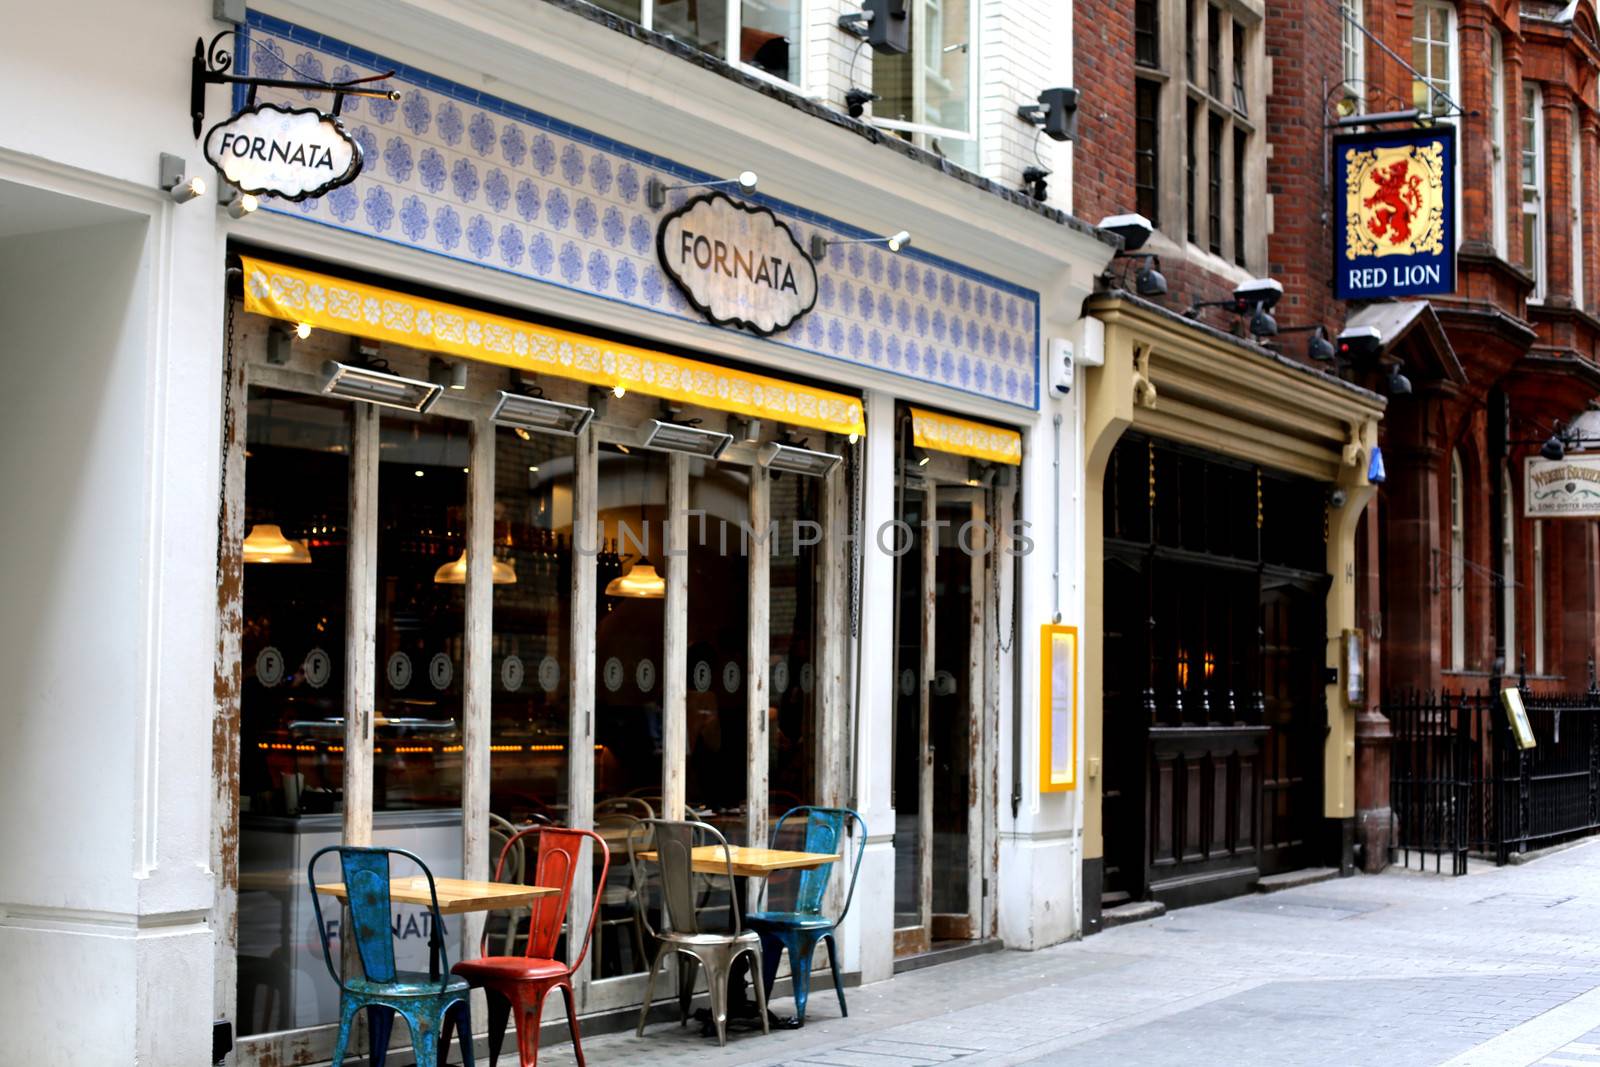 Fornata Restaurant Carnaby Street London by Whiteboxmedia